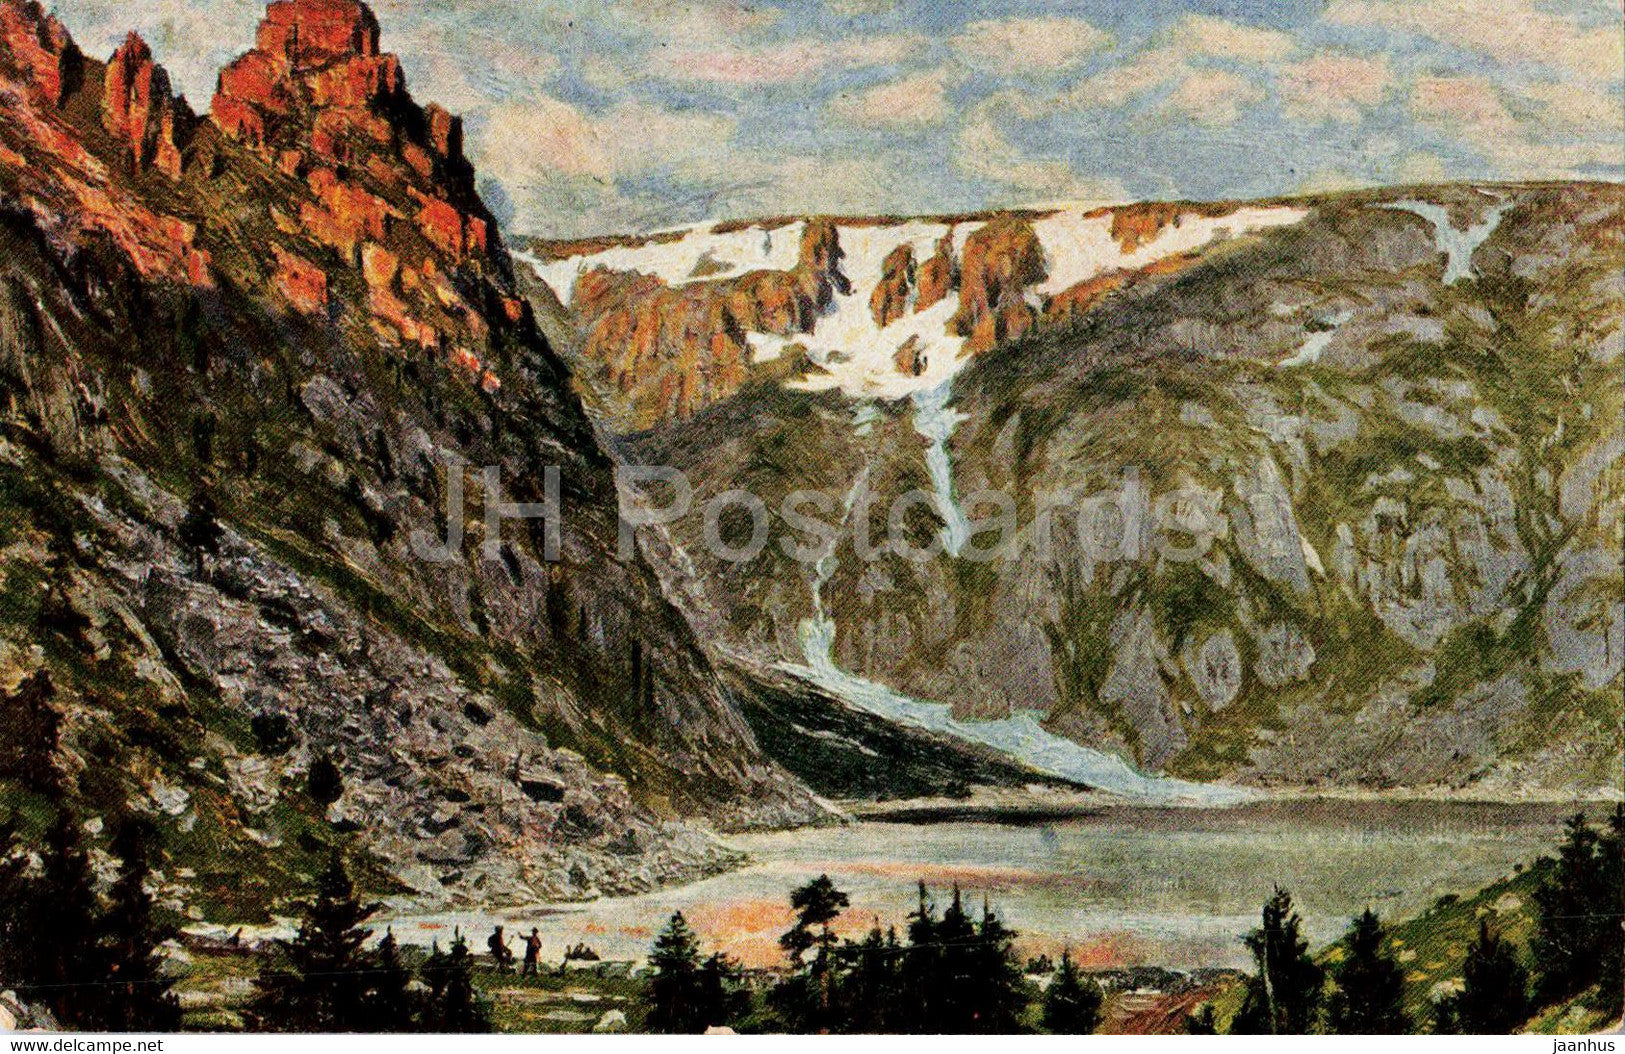 Weisser See - painting by C. Liebich - german art - old postcard - France - unused - JH Postcards